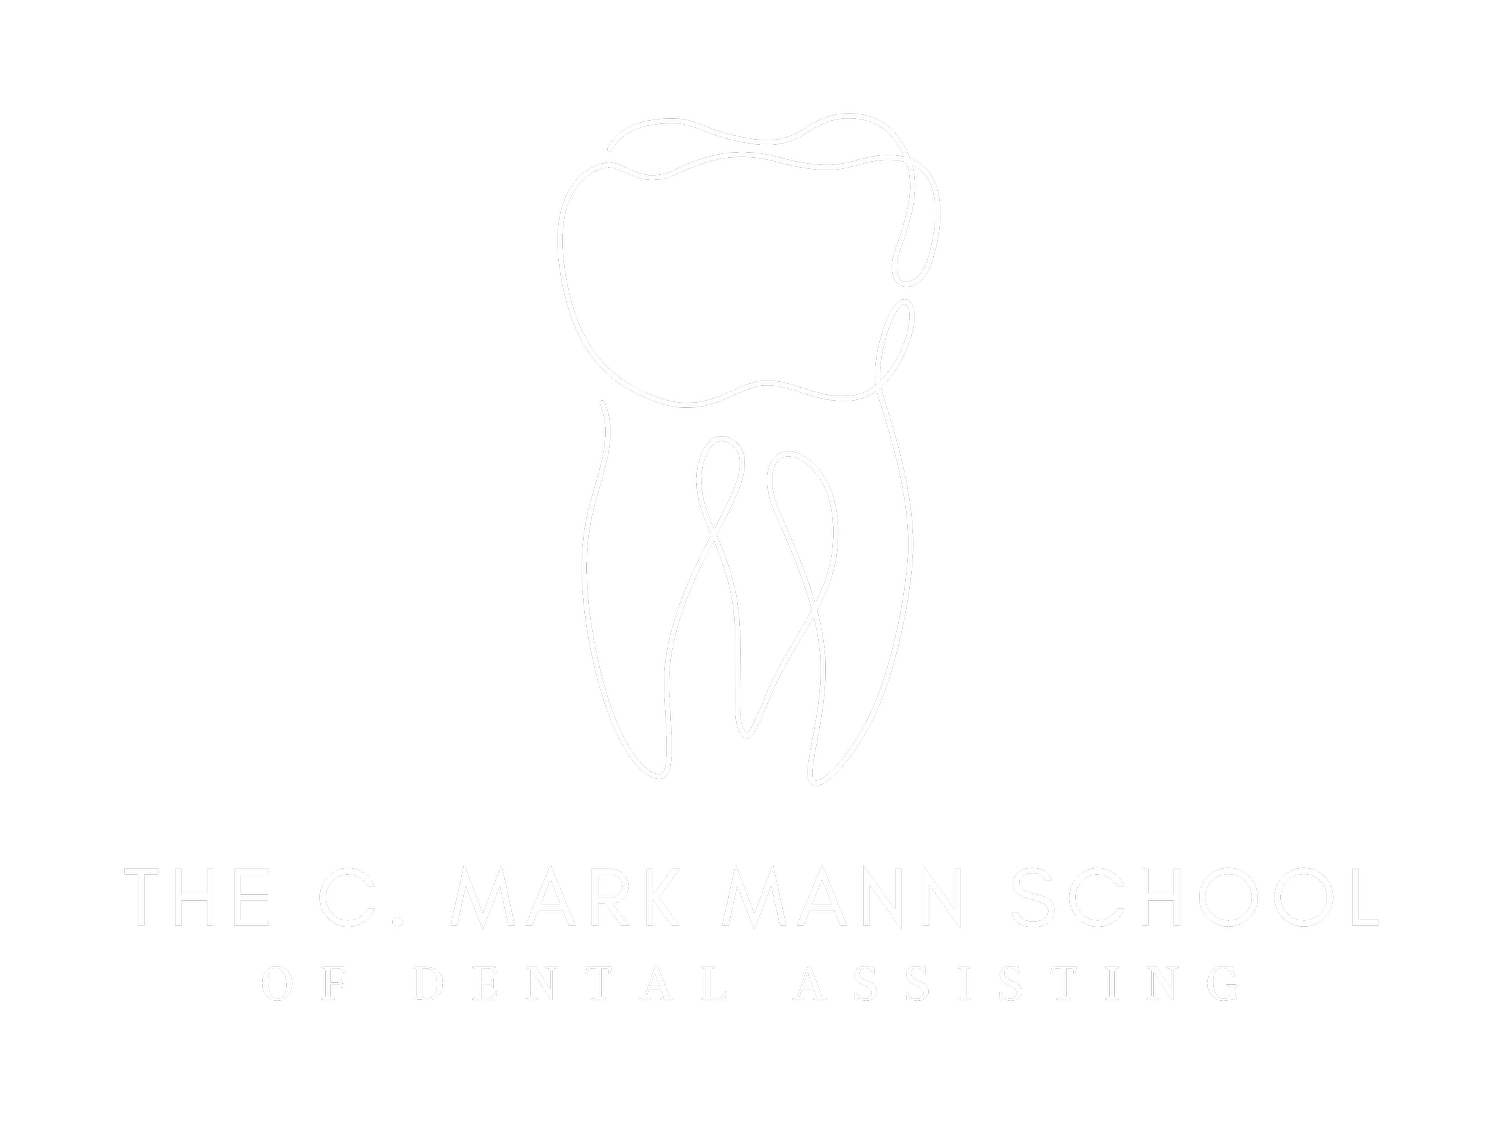 The C. Mark Mann School of Dental Assisting